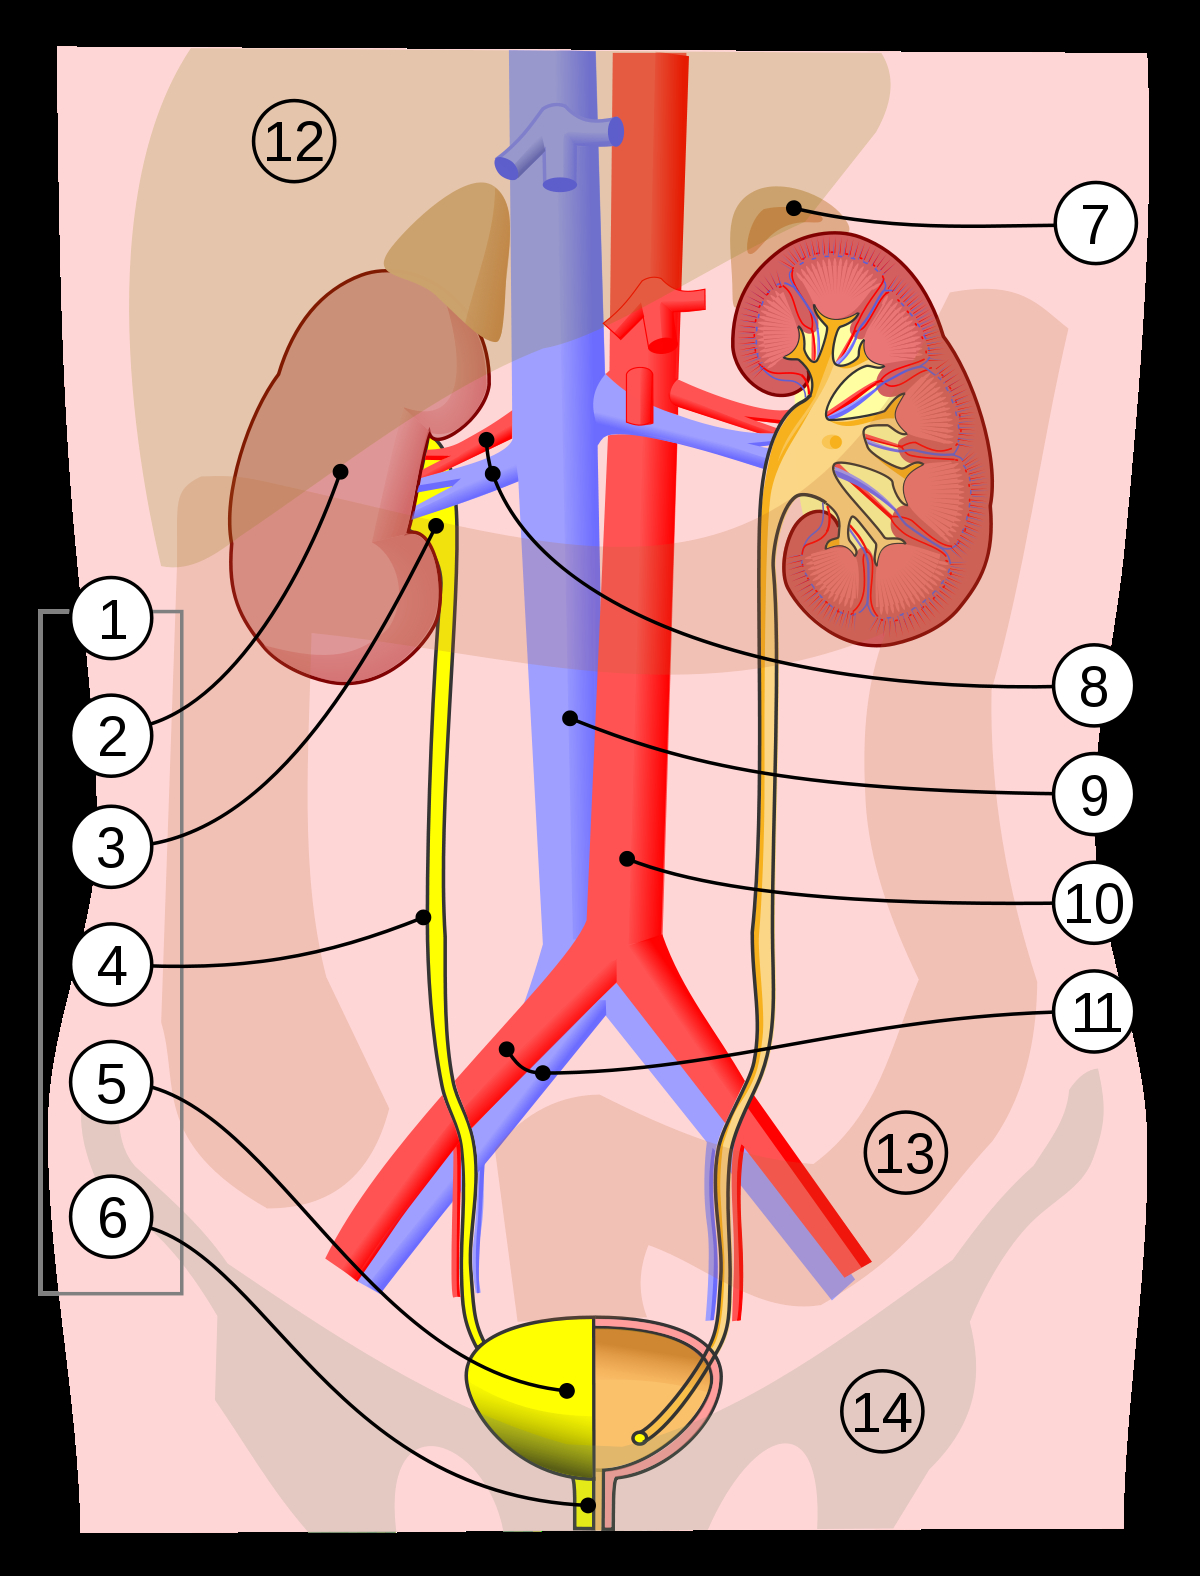 Urinary System Diagram Urinary System Wikipedia